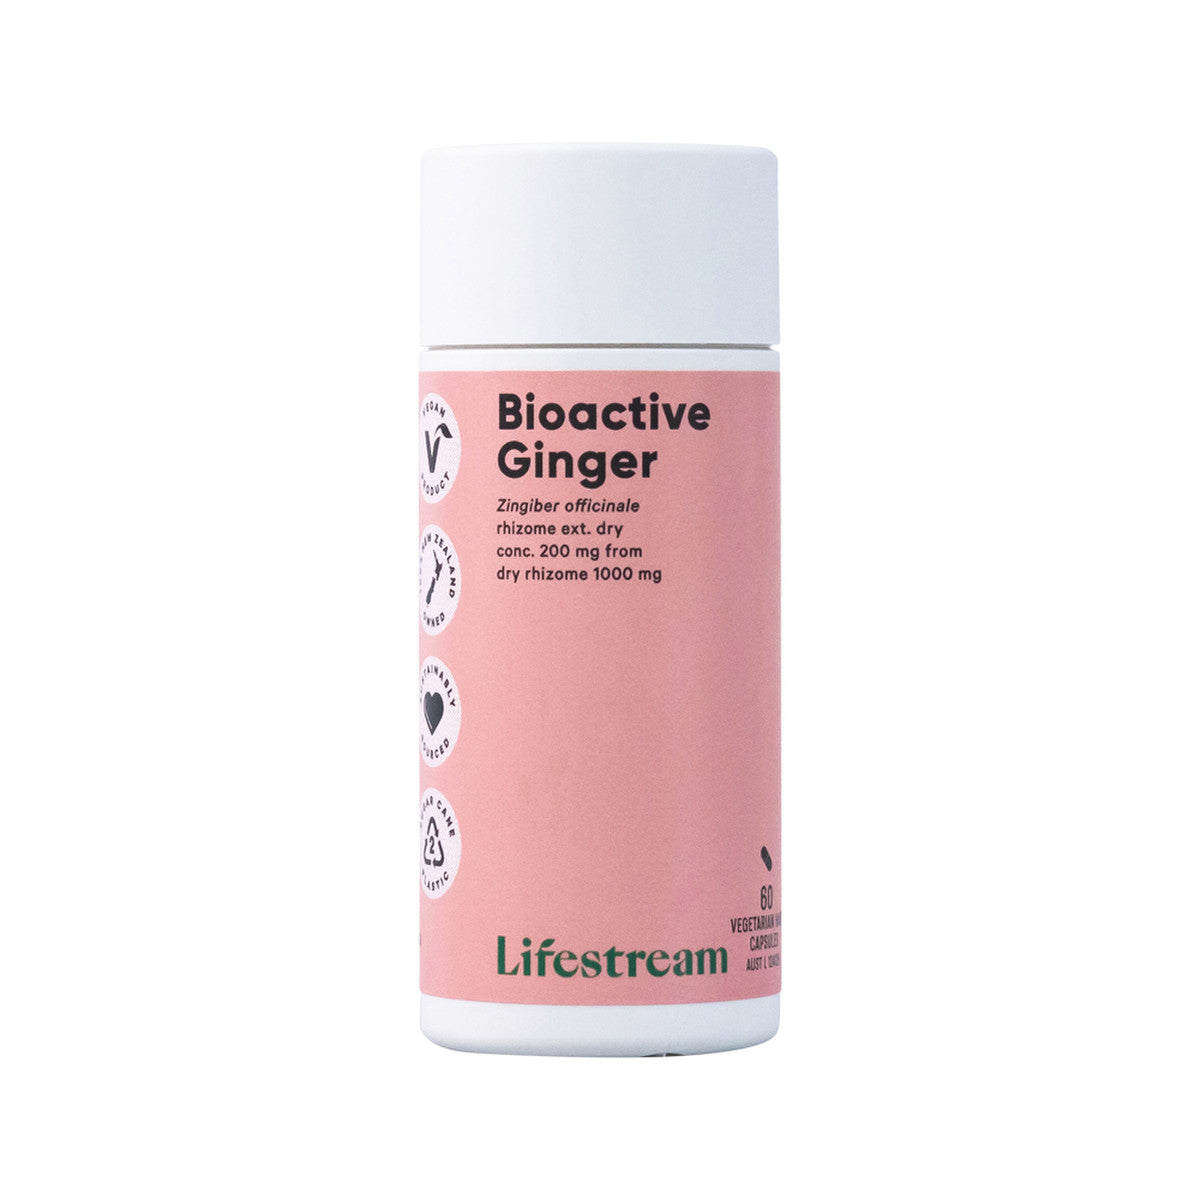 Lifestream - Bioactive Ginger